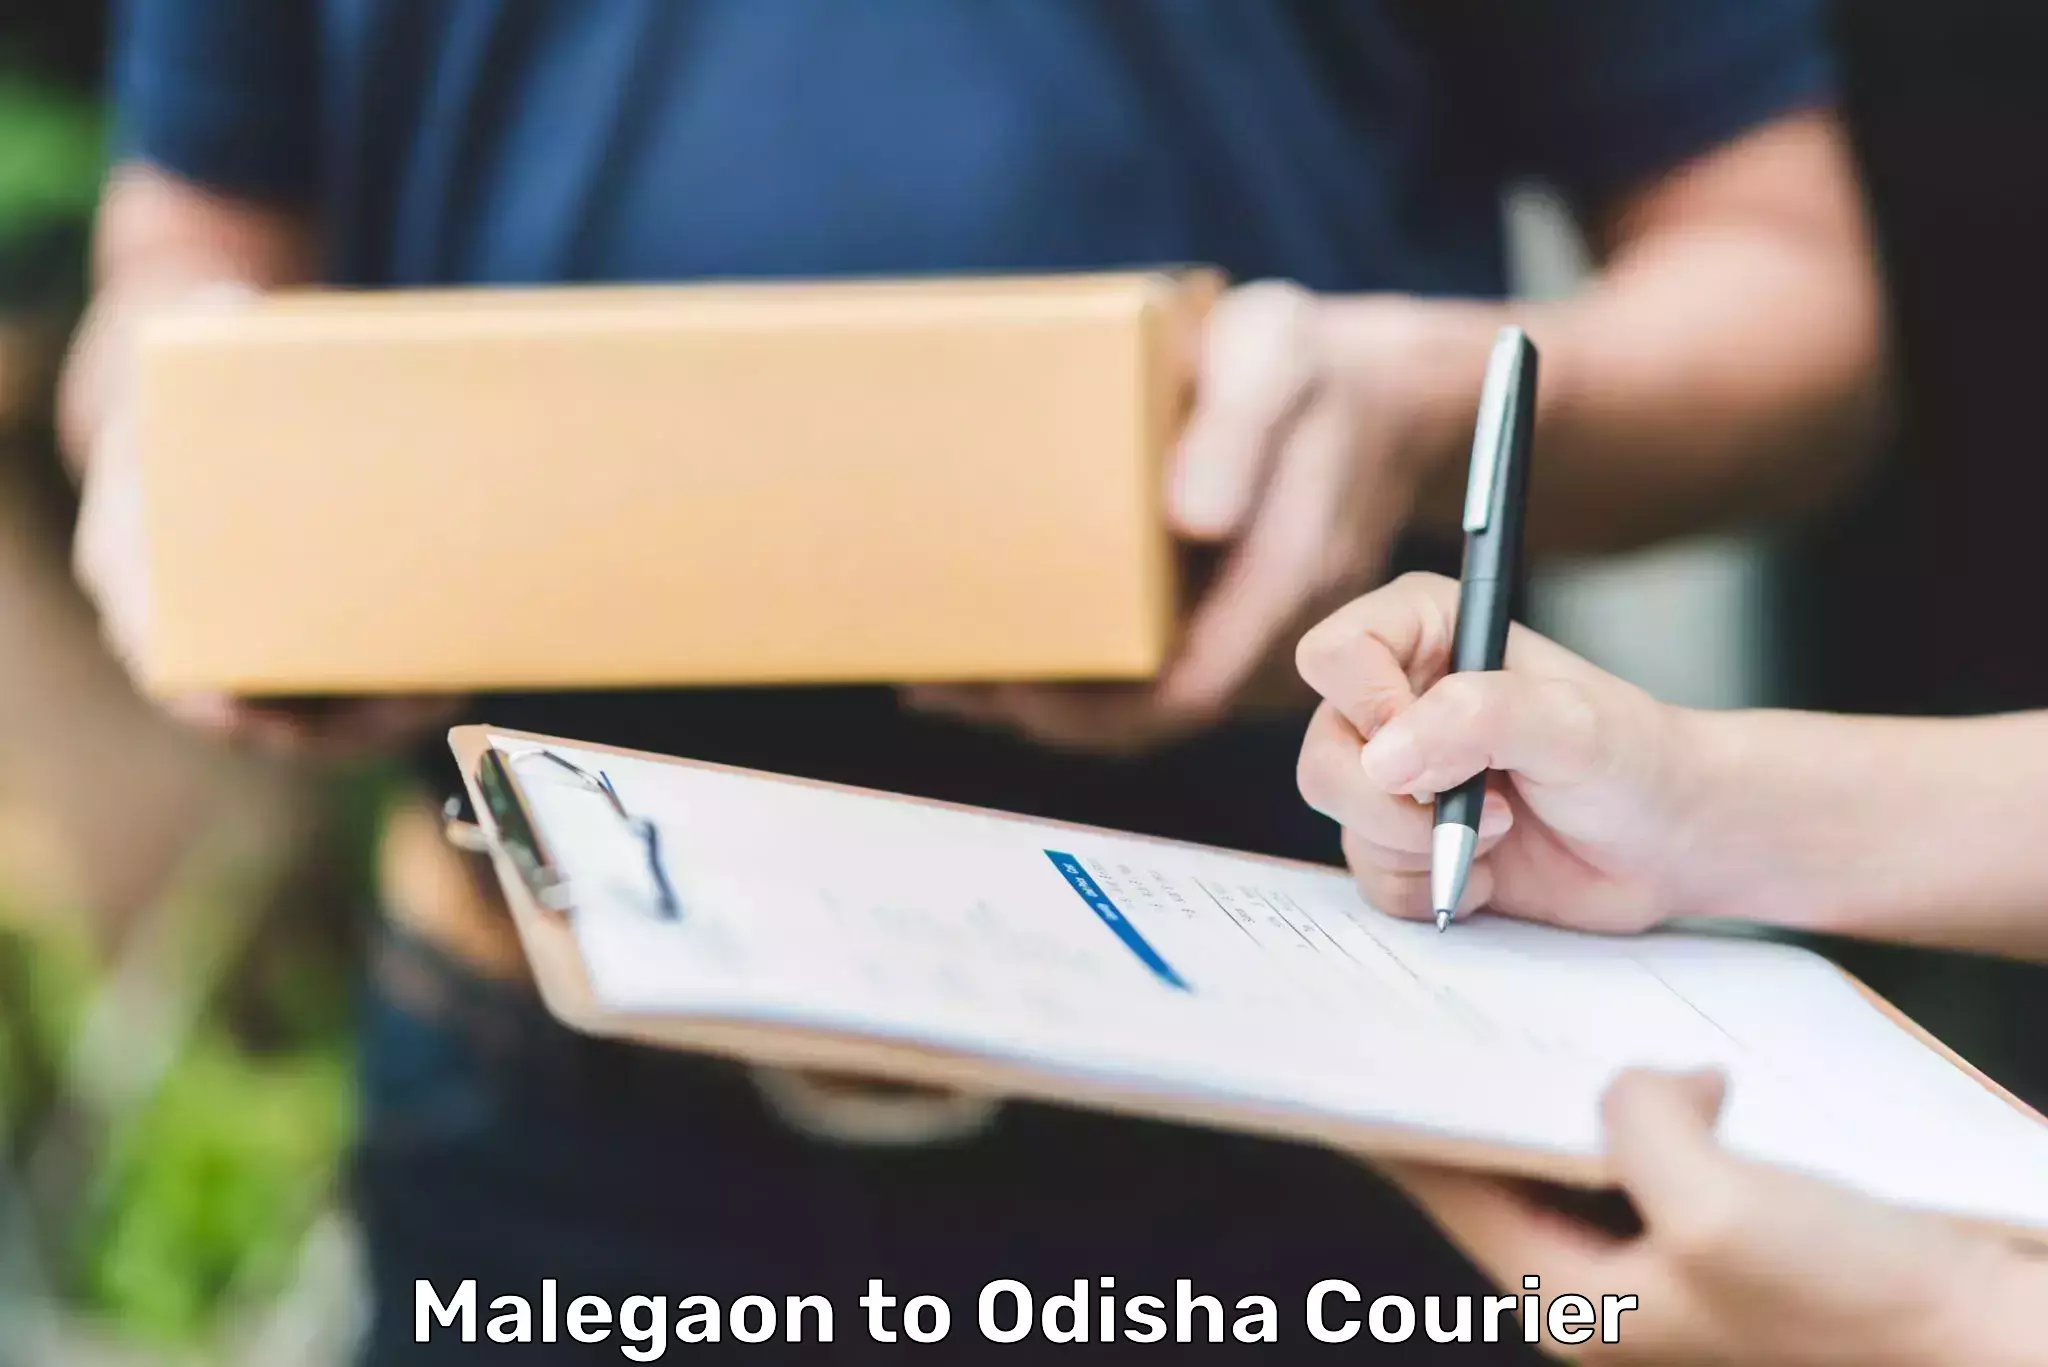 Efficient order fulfillment Malegaon to Mangalpur